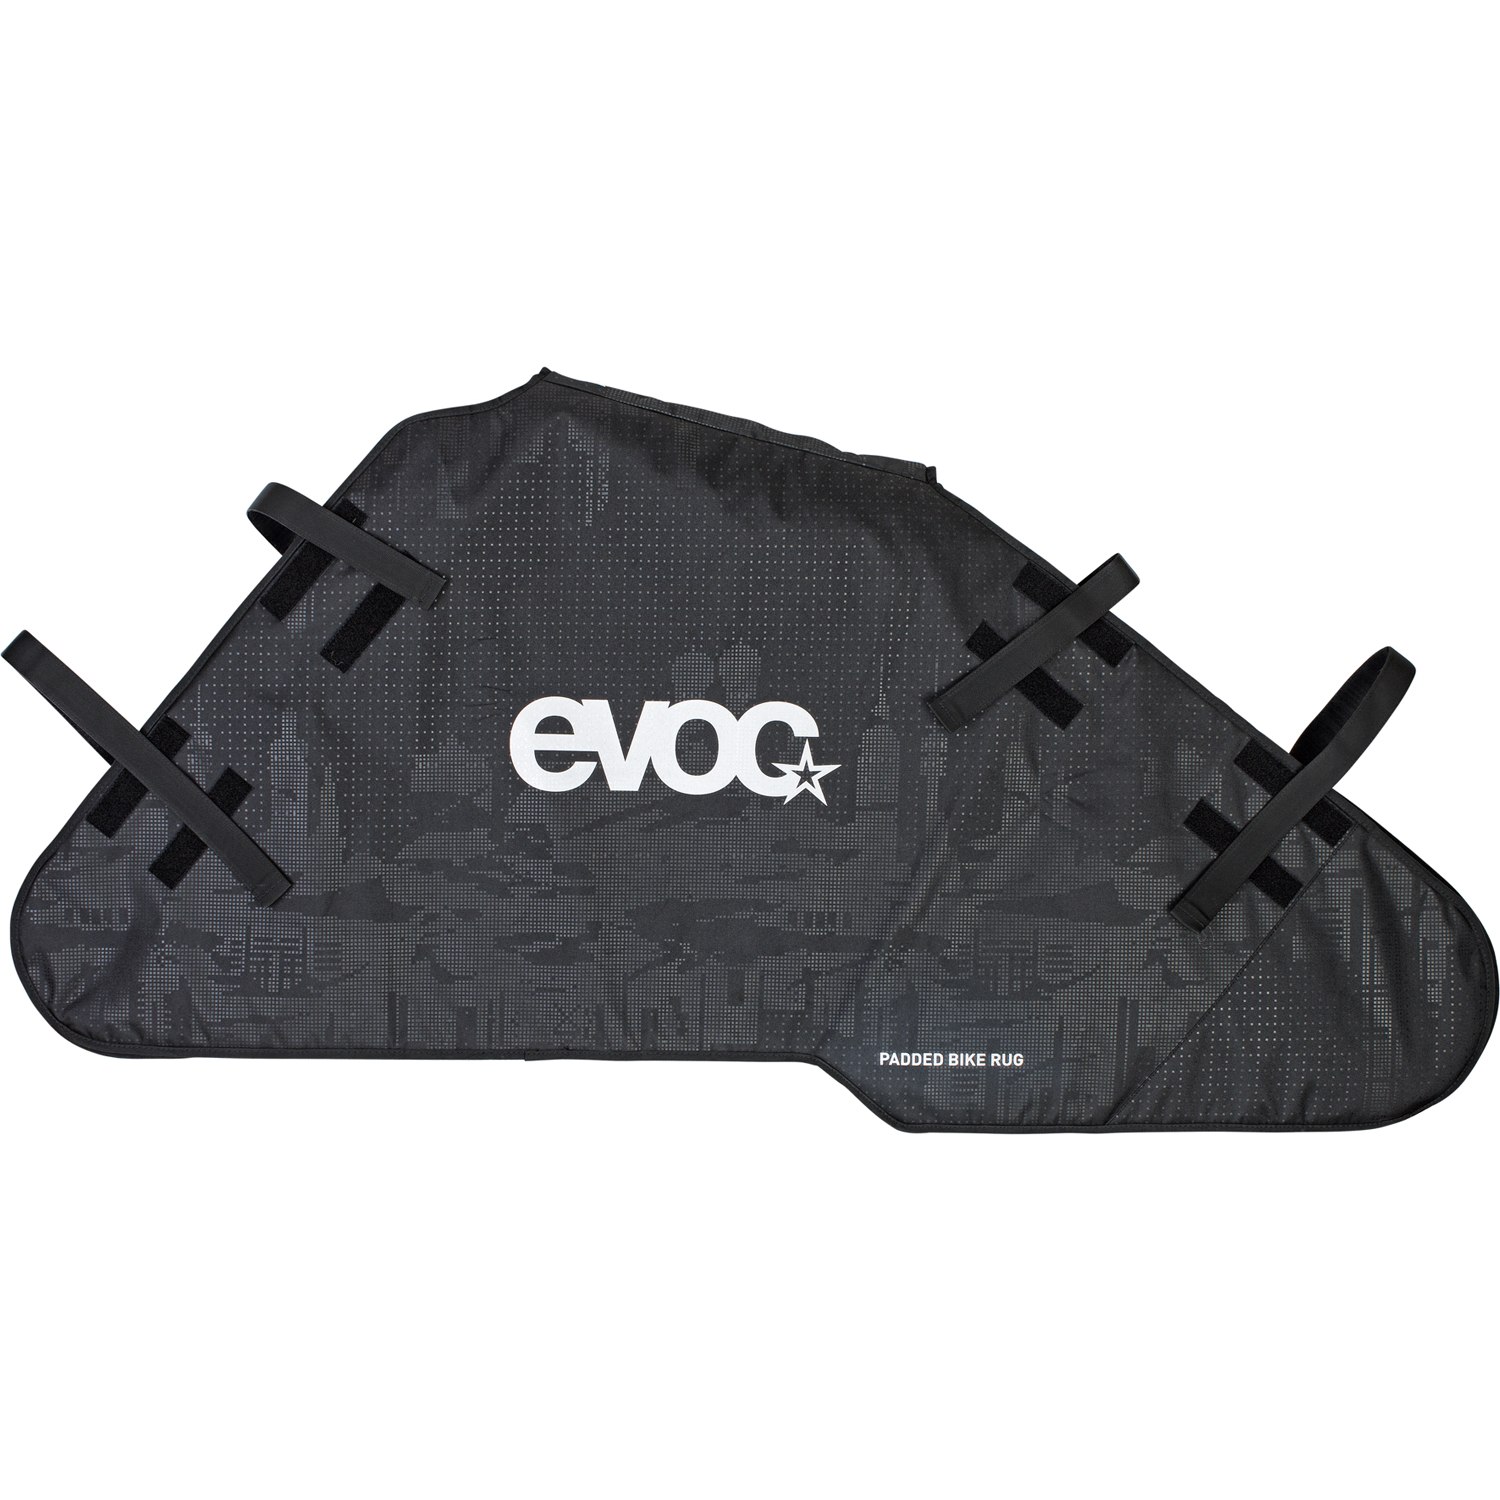 Productfoto van Evoc PADDED BIKE RUG - Bike Cover Bag - Black